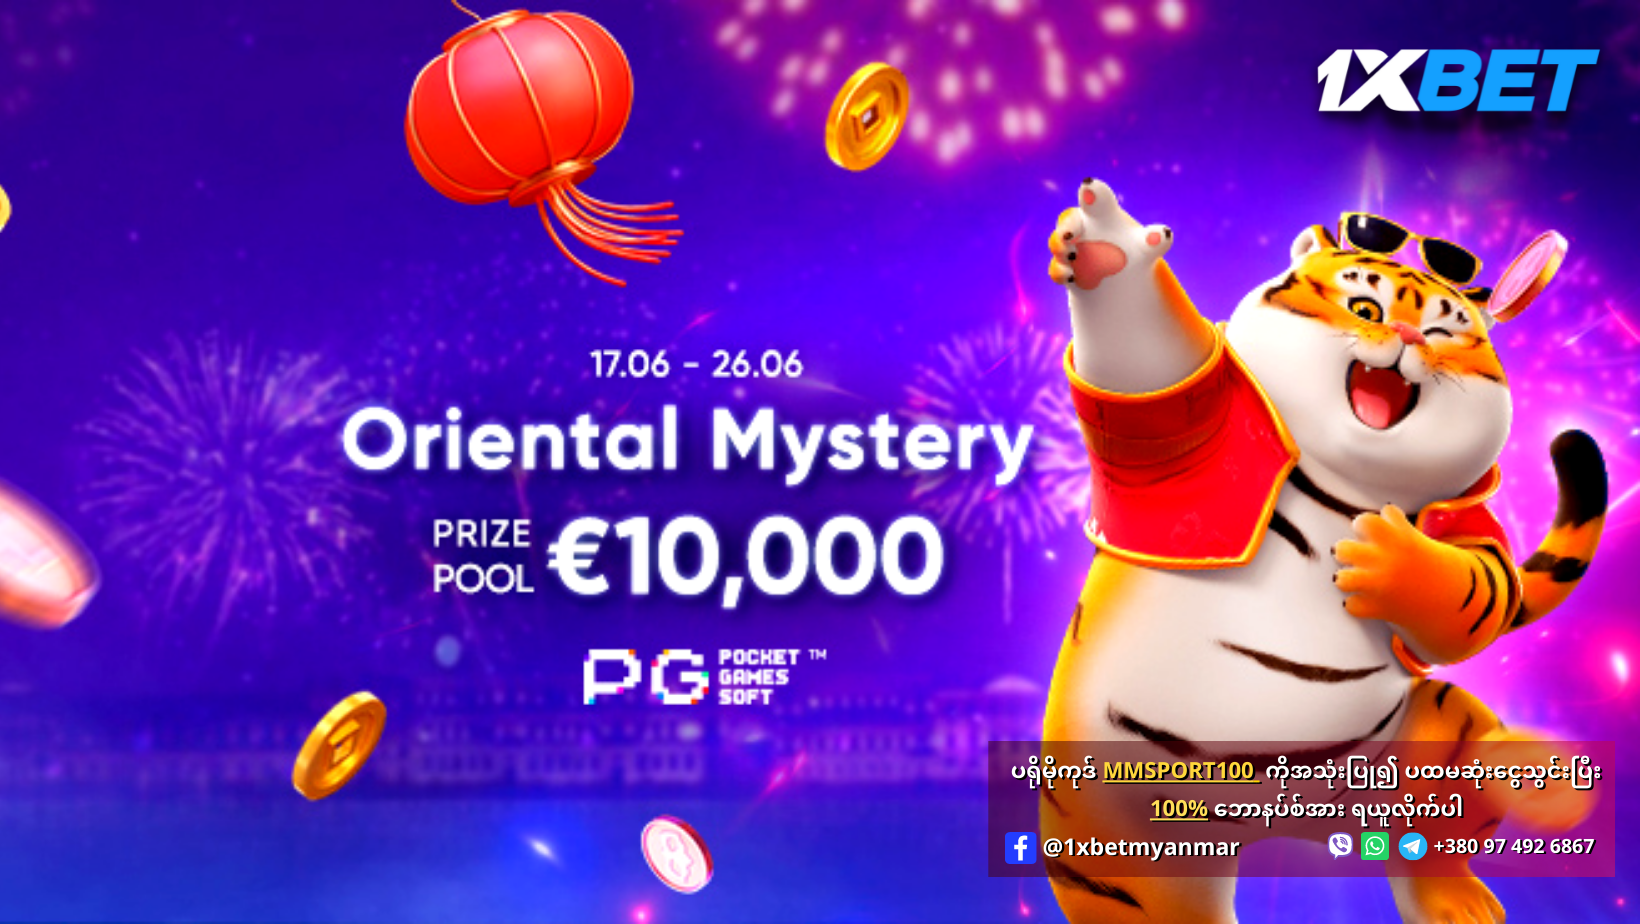 1xBet Oriental Mystery Promotion